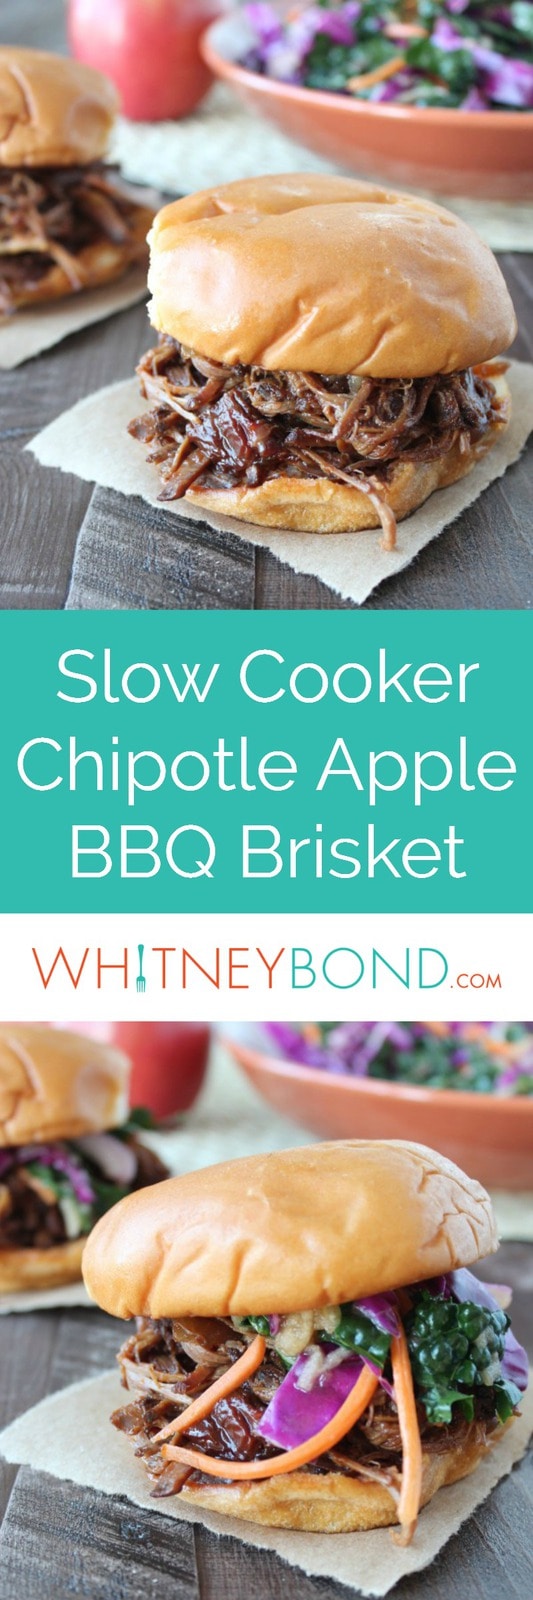 Slow Cooked Chipotle Apple BBQ Brisket Sandwich Recipe